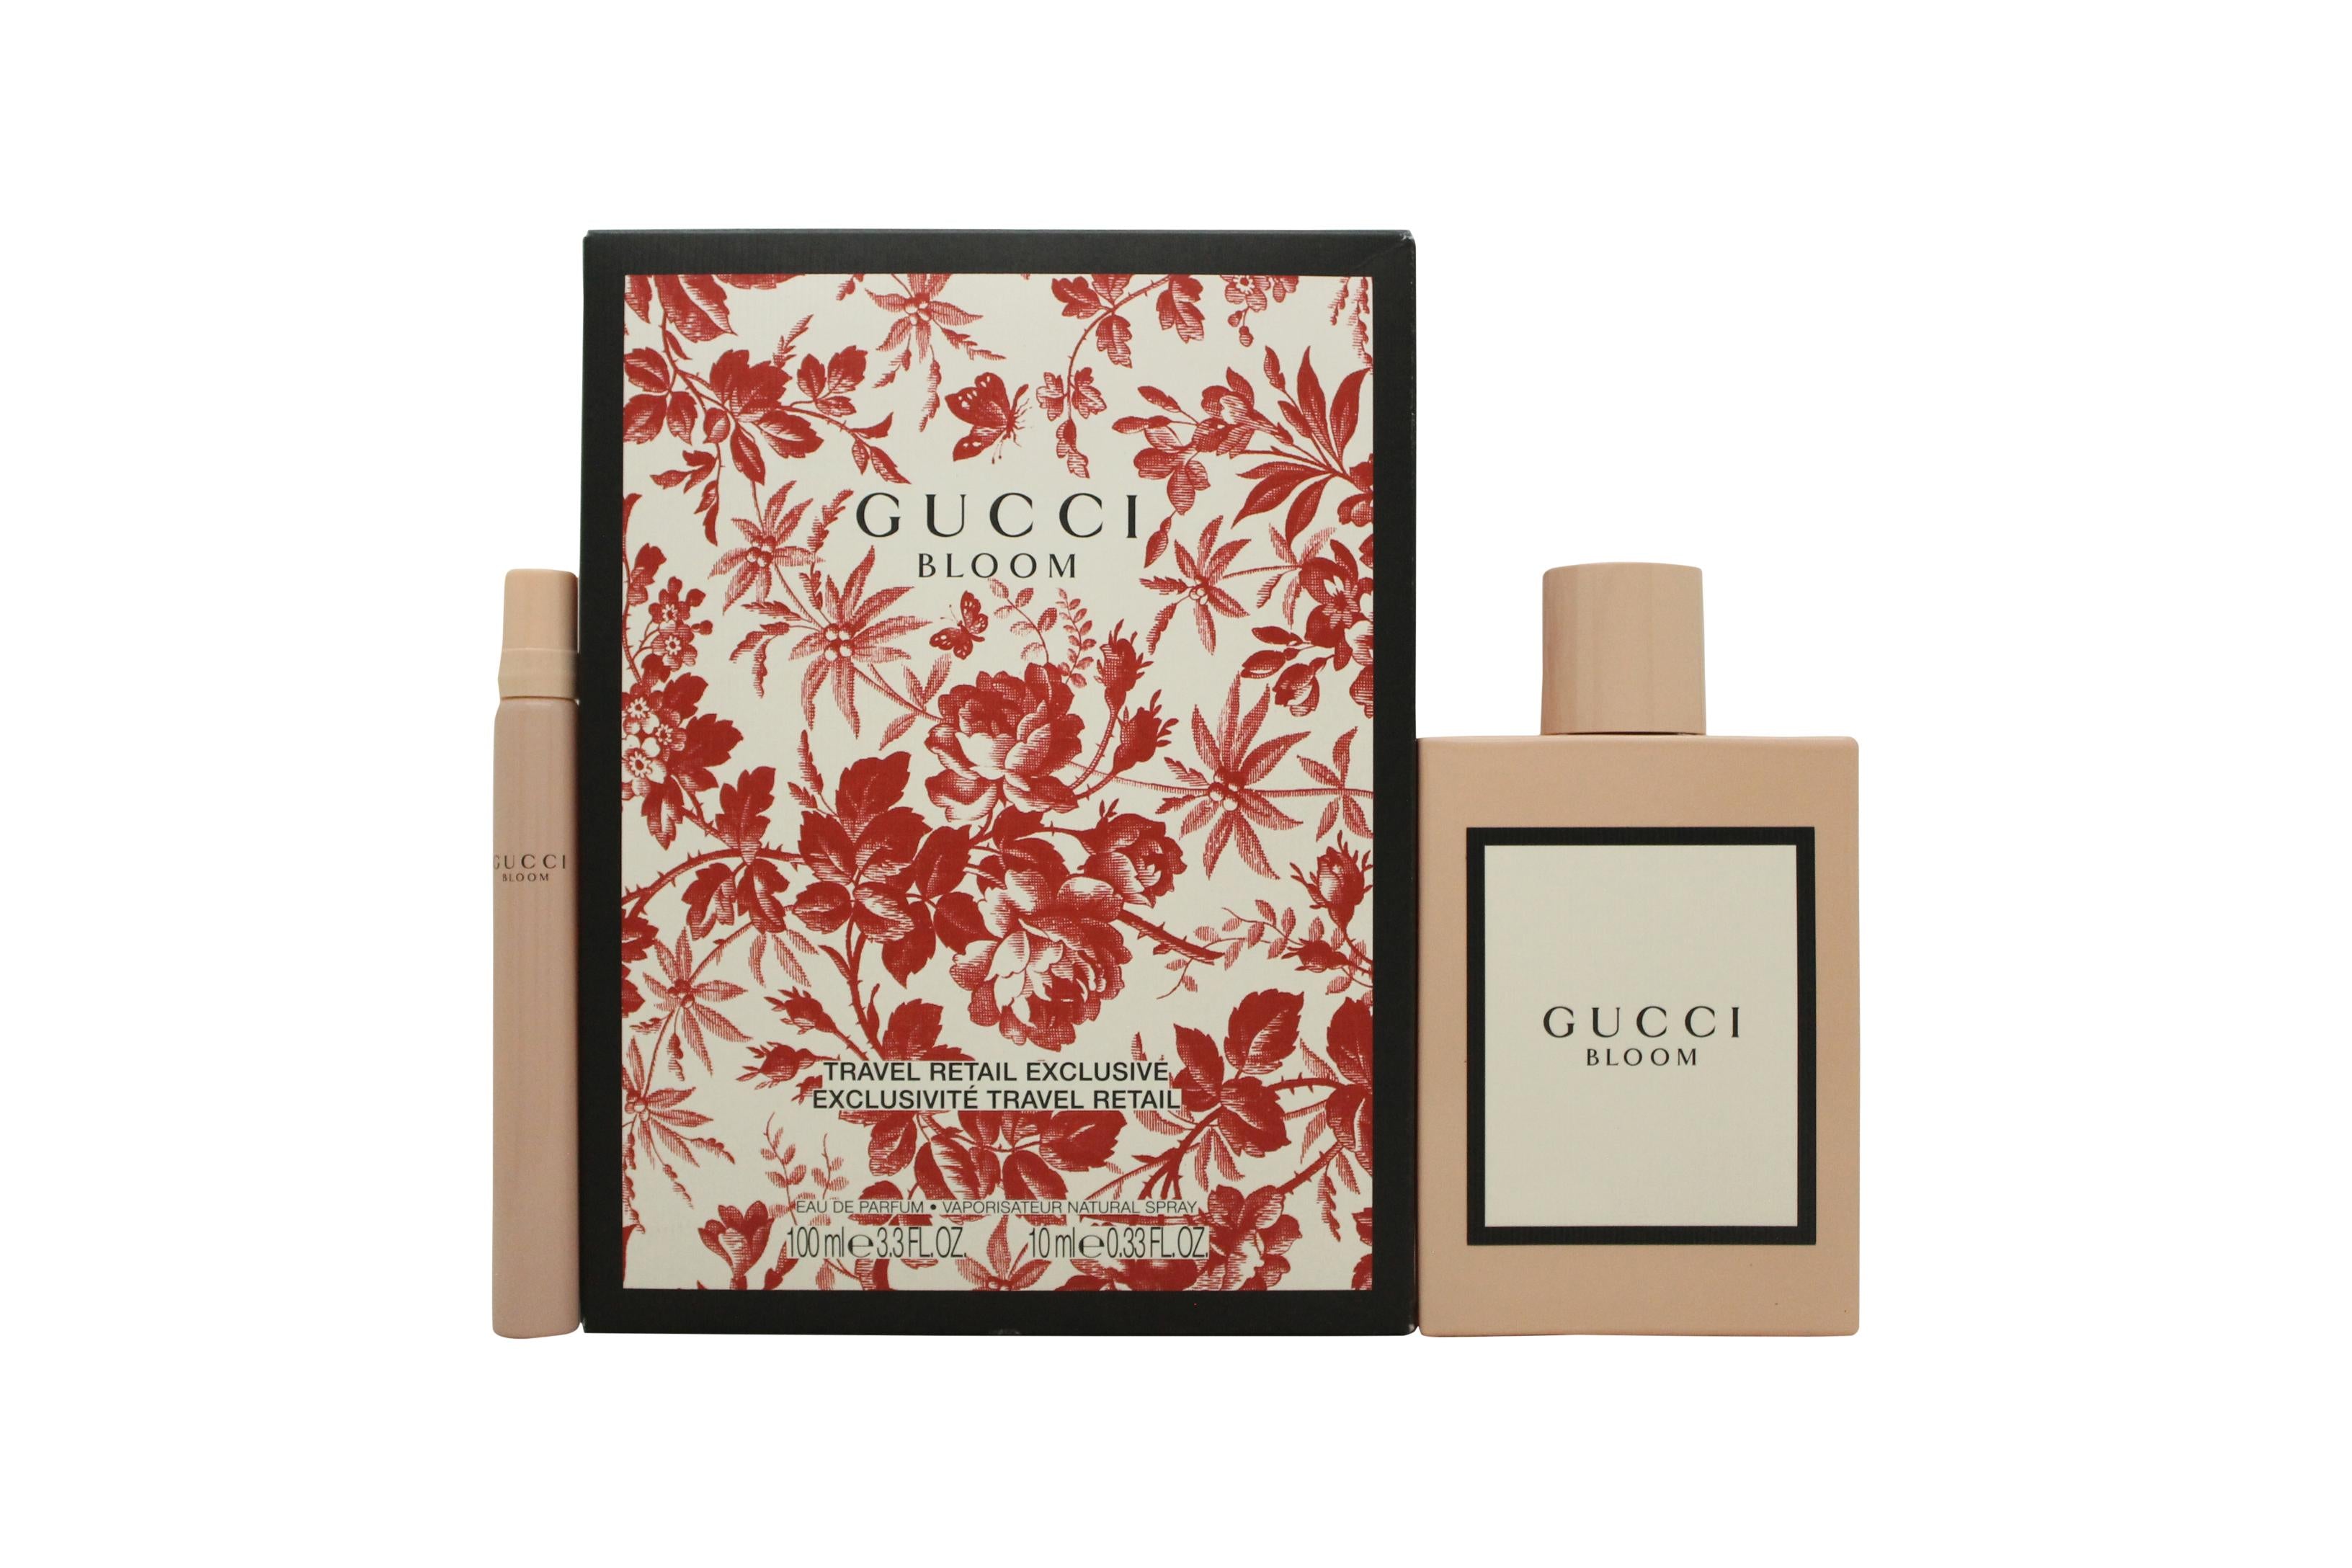 View Gucci Bloom Gift Set 100ml EDP 10ml EDP information